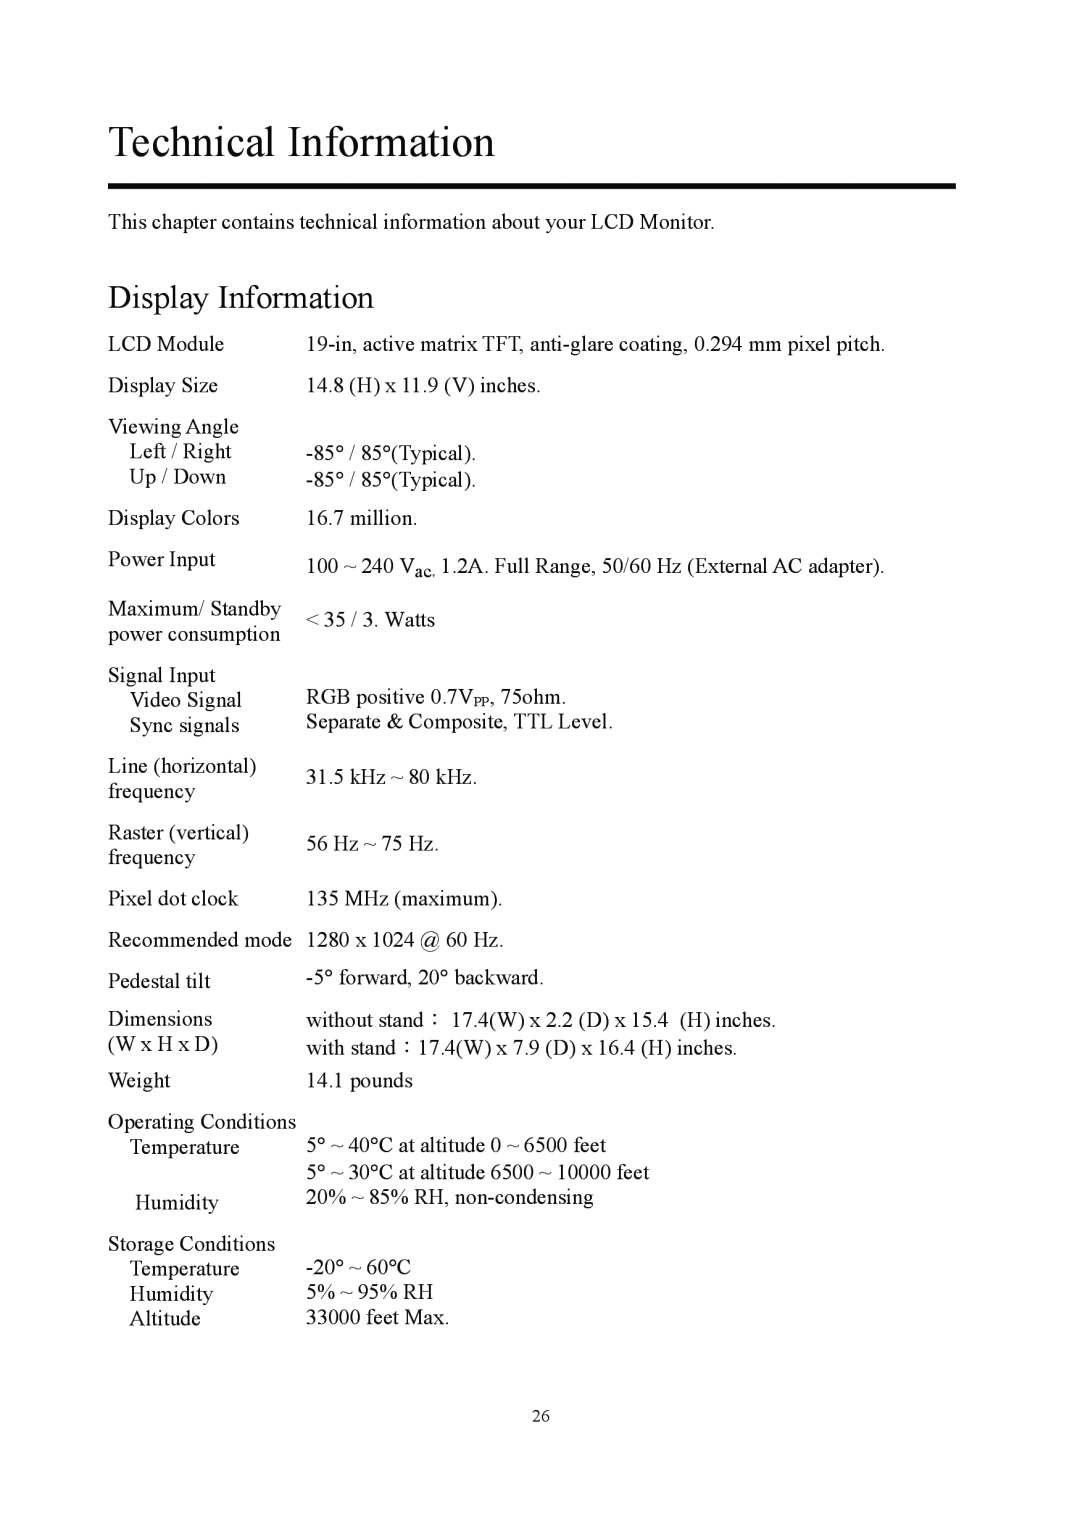 Planar PE1900 manual Technical Information, Display Information 